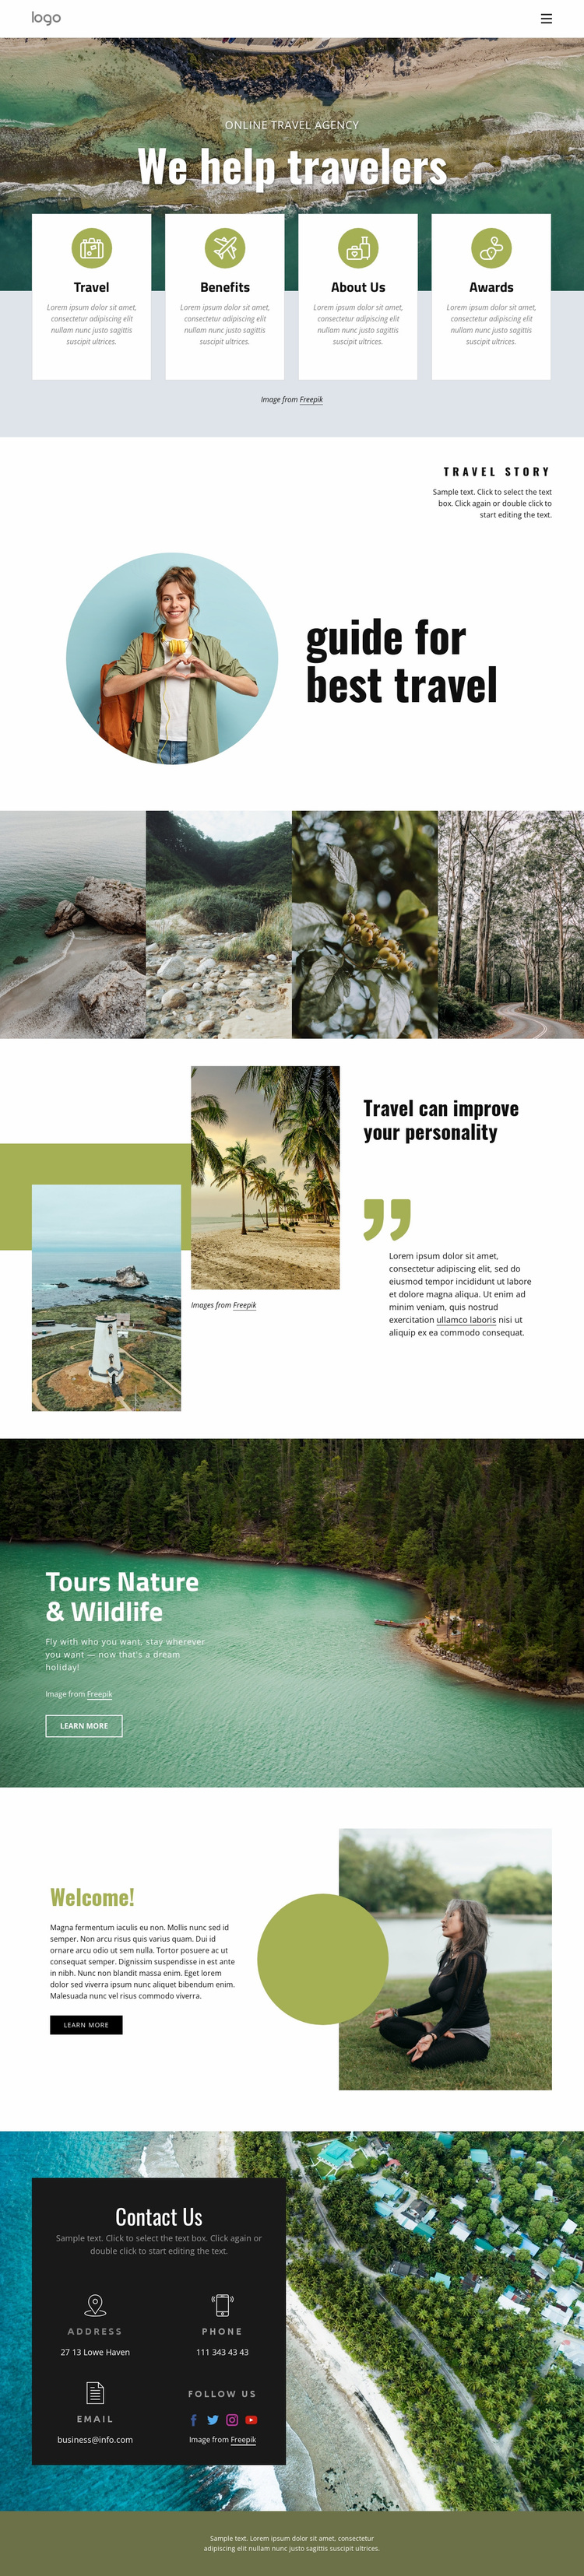 We help manage your trip Website Design